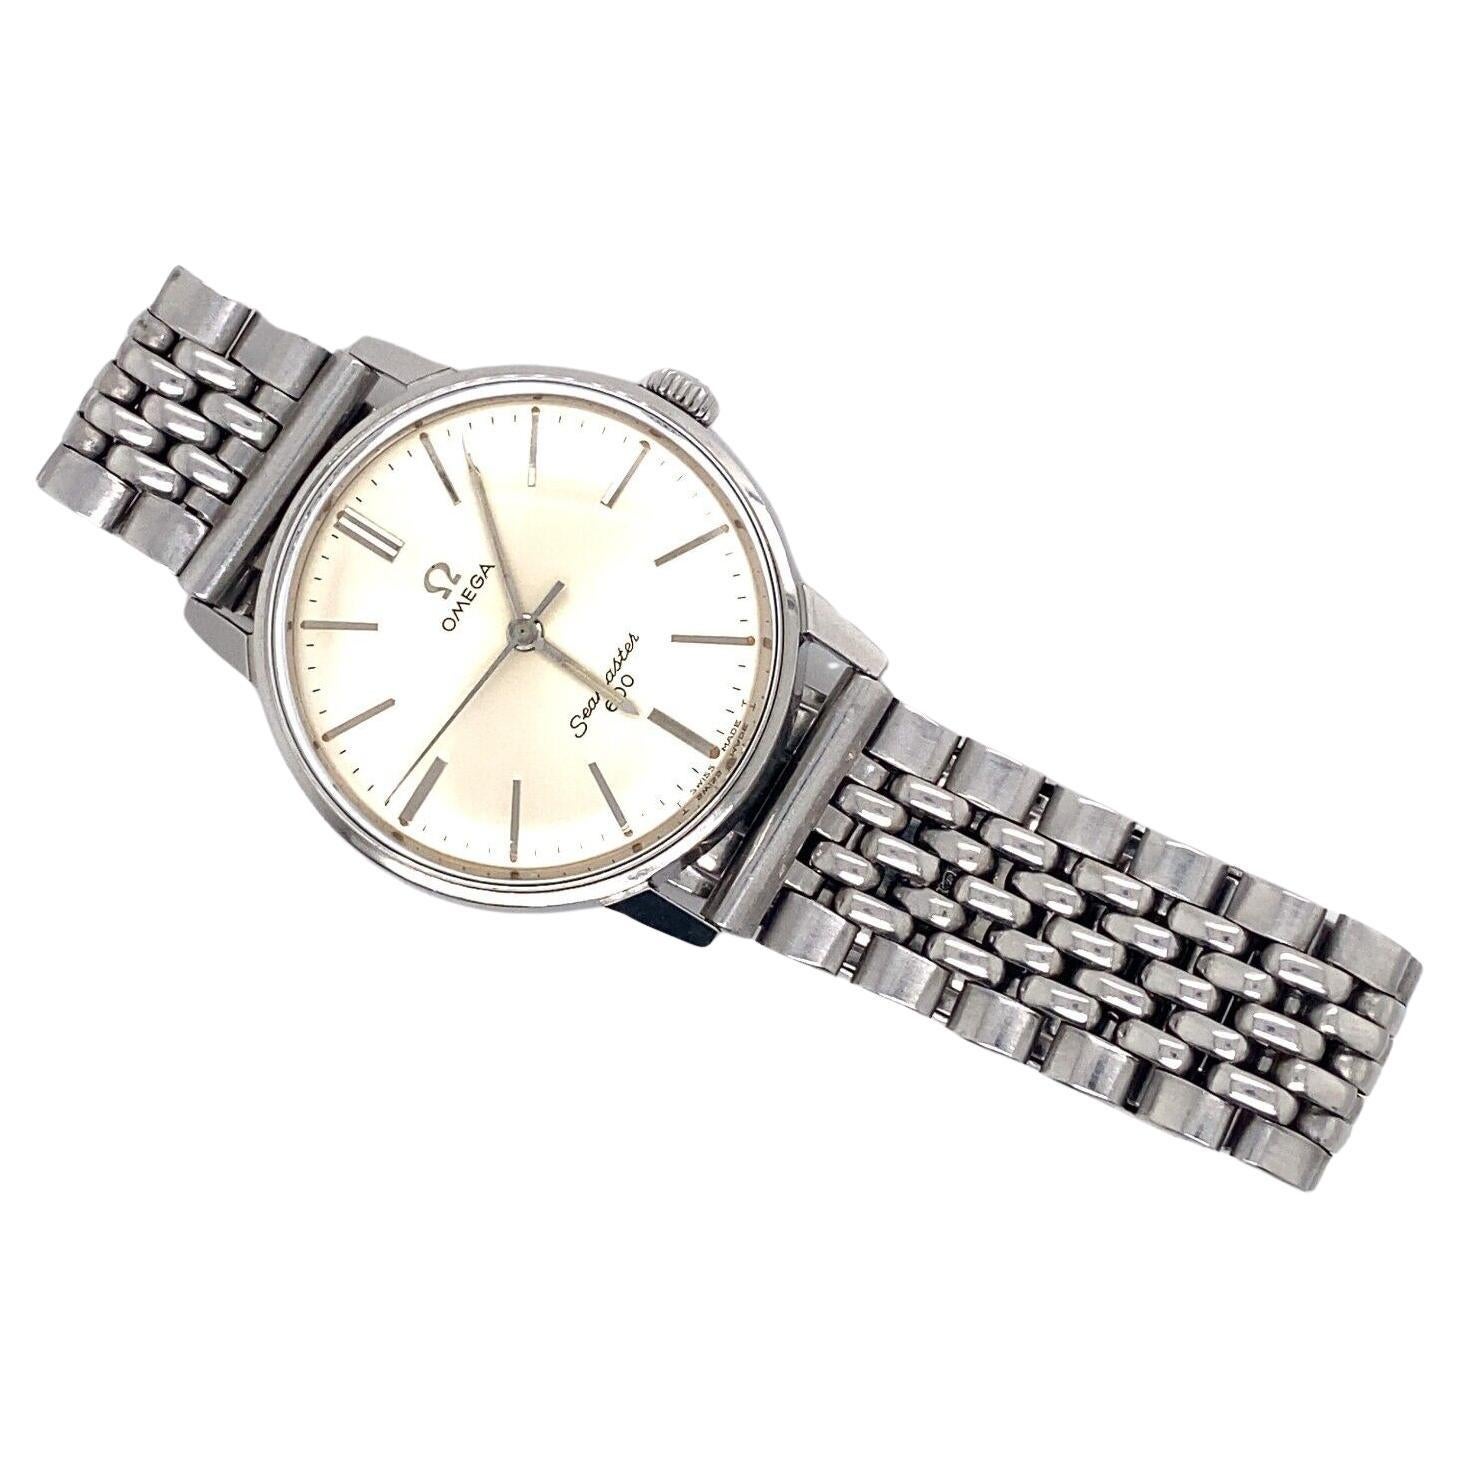 Omega Seamaster 600 Vintage Mechanical Wrist Watch